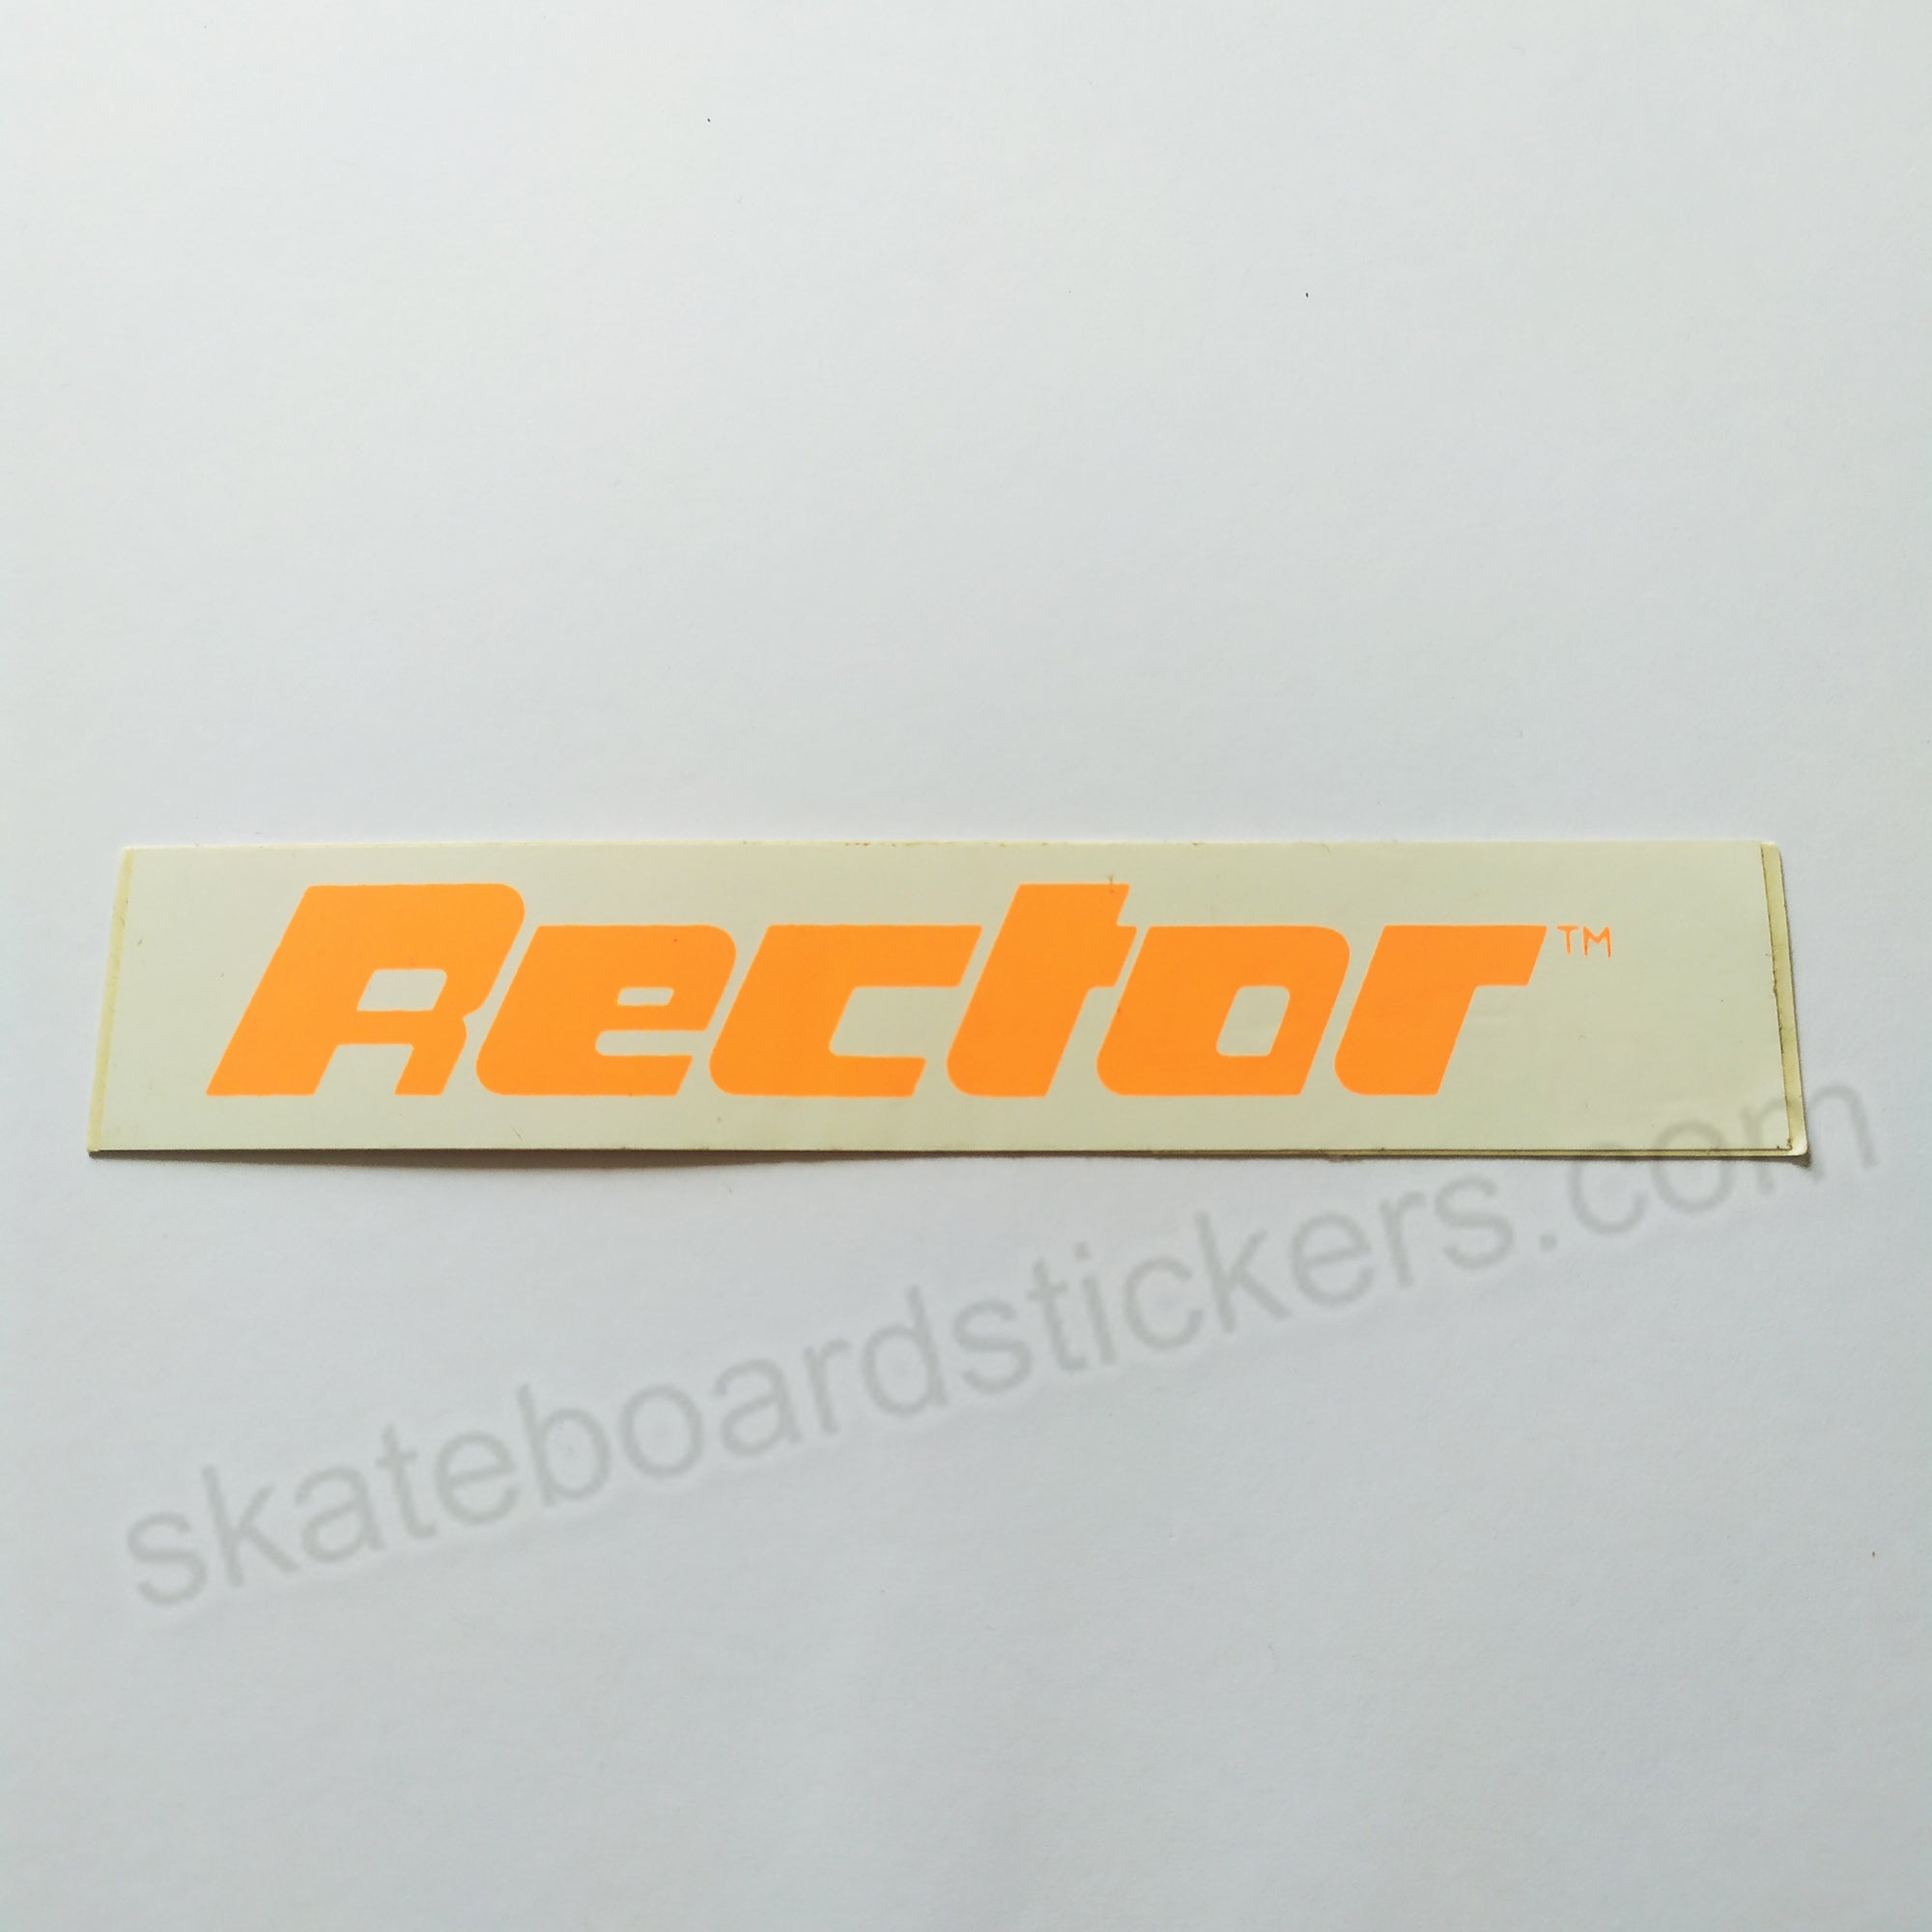 Rector Protection Old School Skateboard Sticker - SkateboardStickers.com